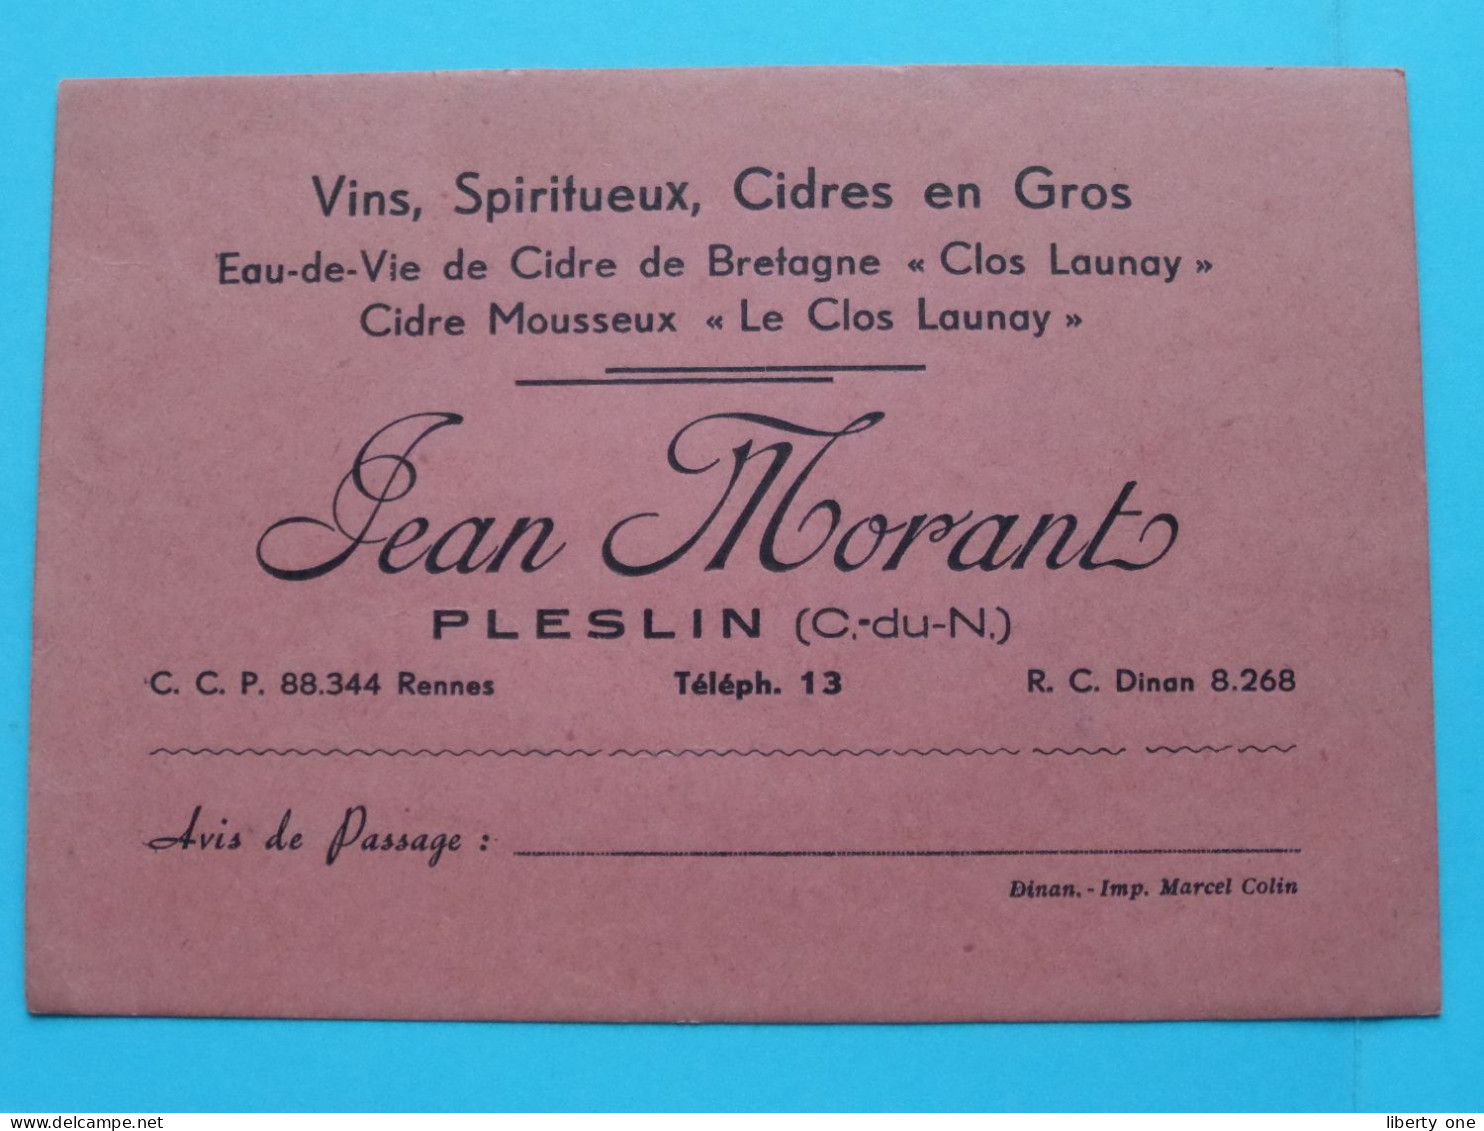 Jean MORANT Vins, Spiritueux, Cidres à PLESLIN (C.-du-N.) Tél 13 ( Zie / Voir SCANS ) France 195? ! - Visitenkarten